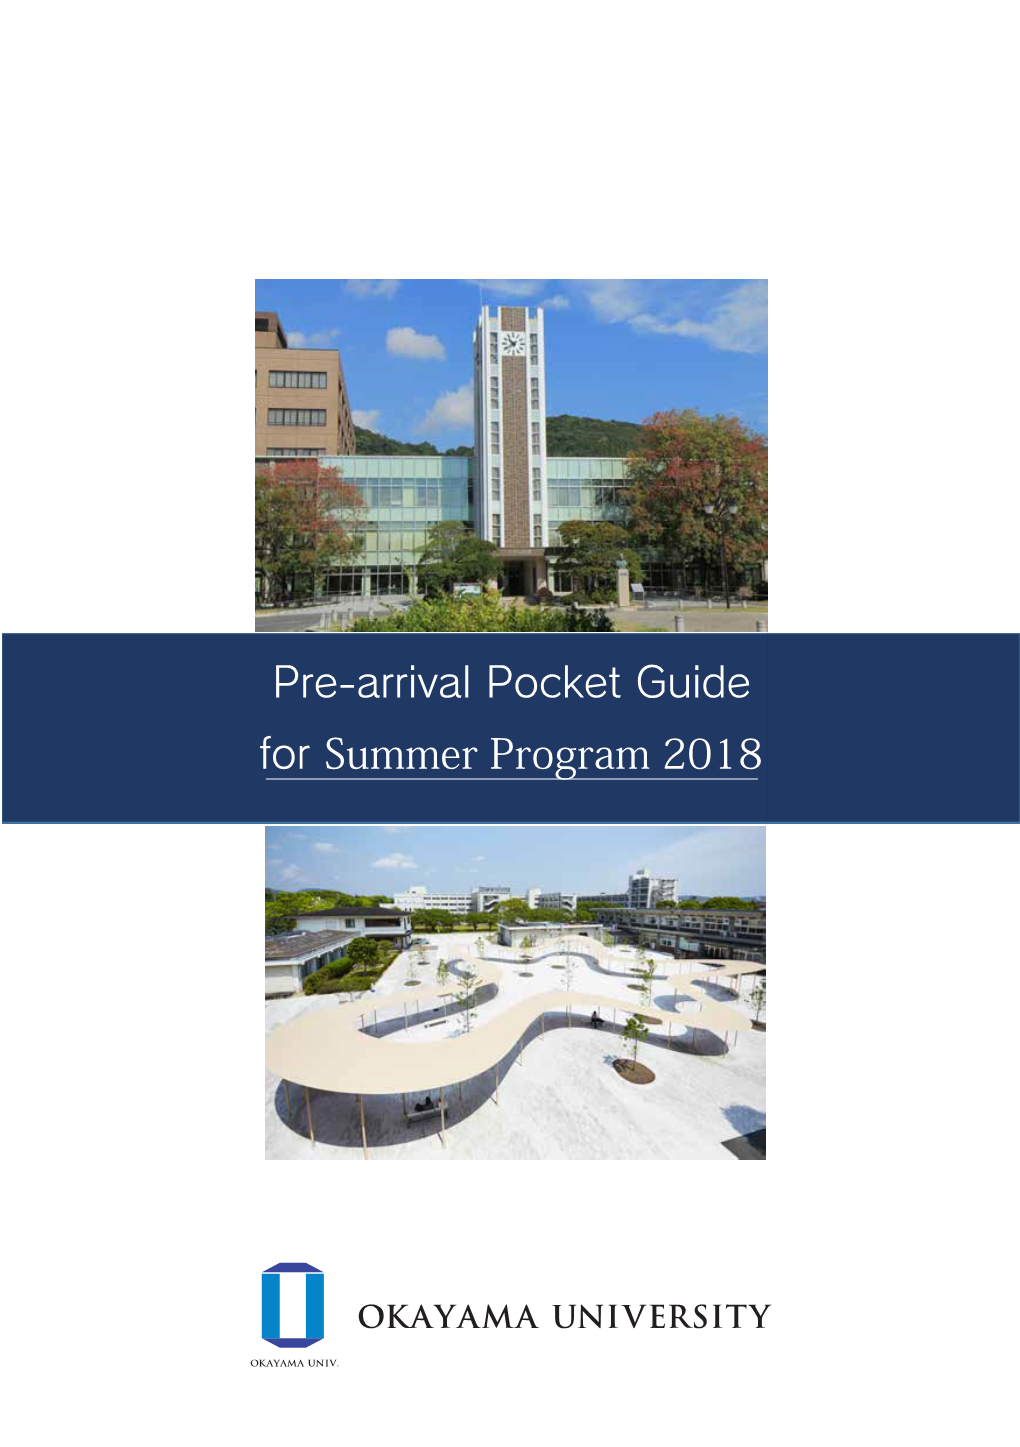 Pre-Arrival Pocket Guide for Summer Program 2018